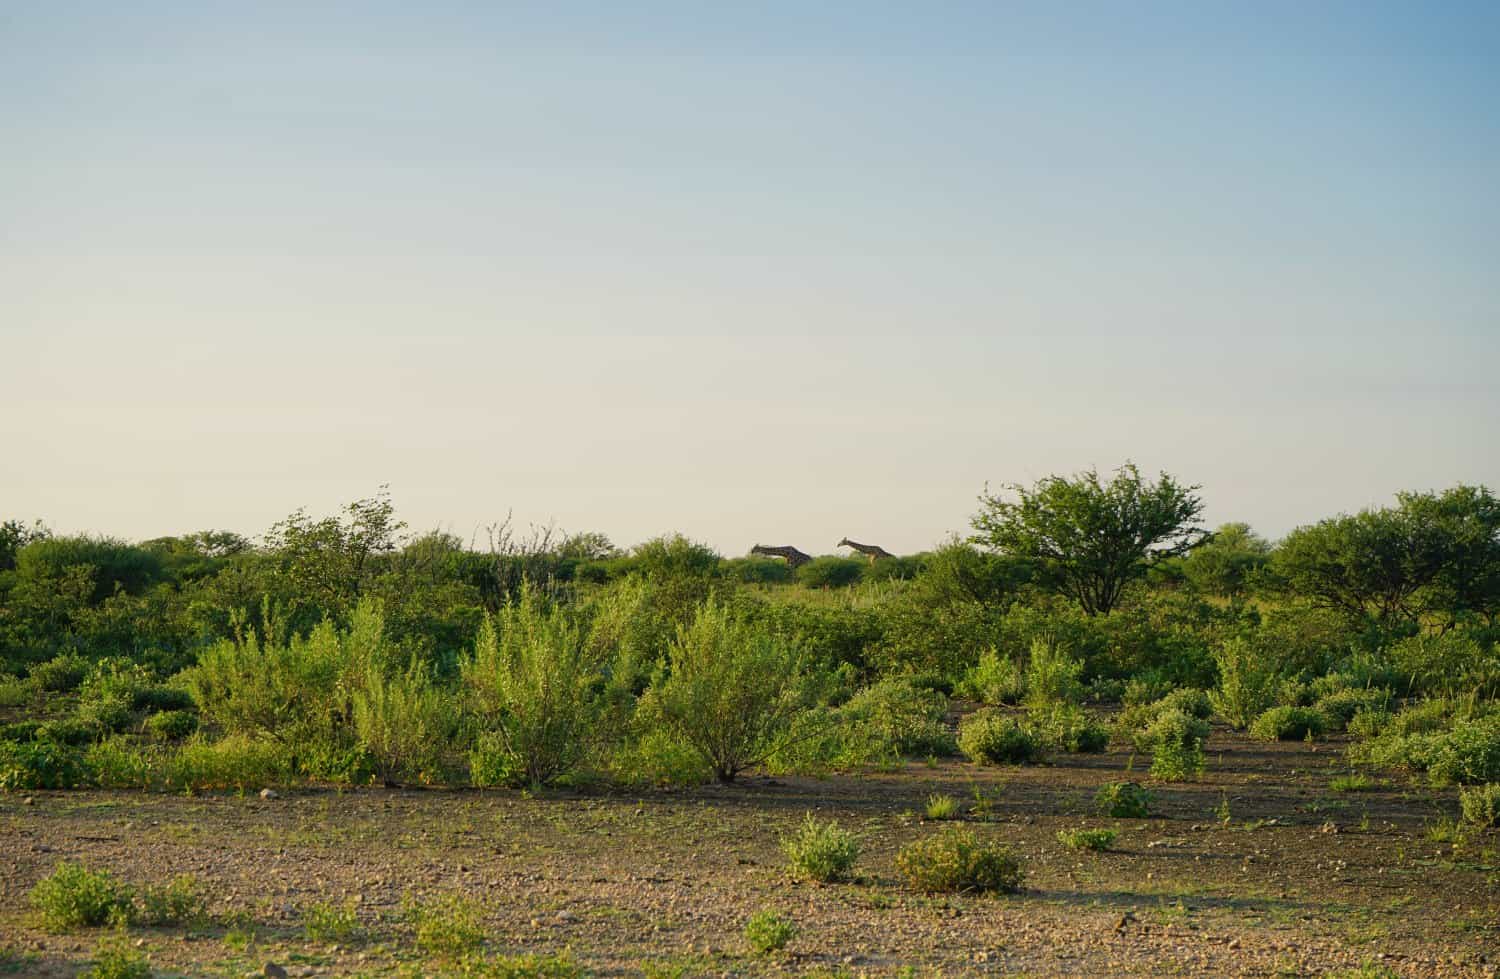 Giraffes in Etosha National Park Namibia